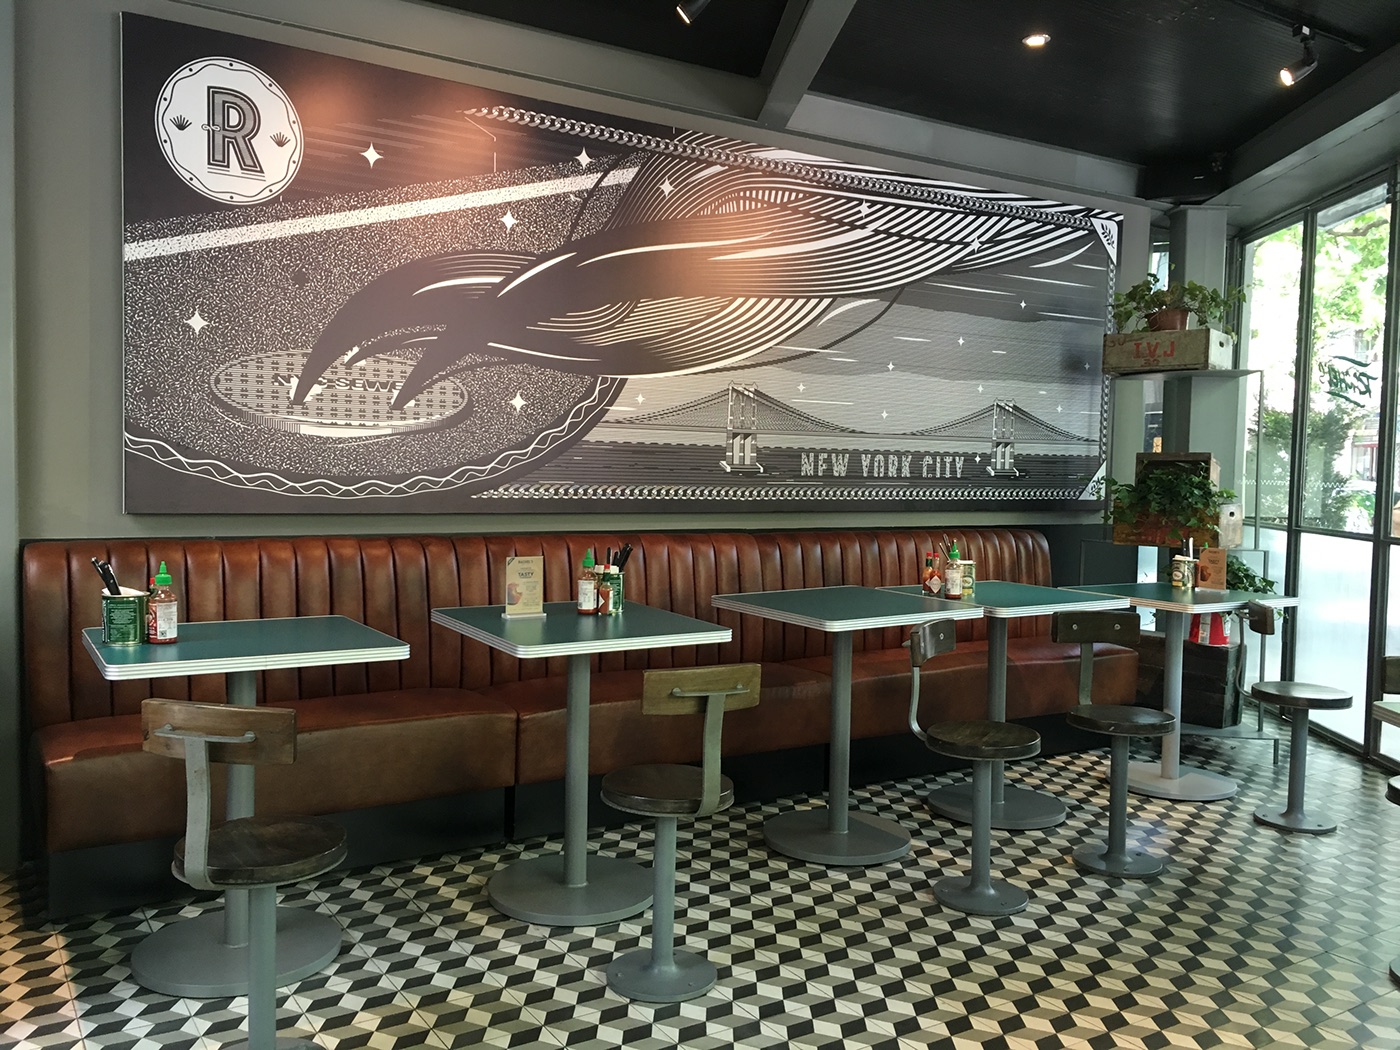 rachels burger diner fastfood american diner Retro restaurant